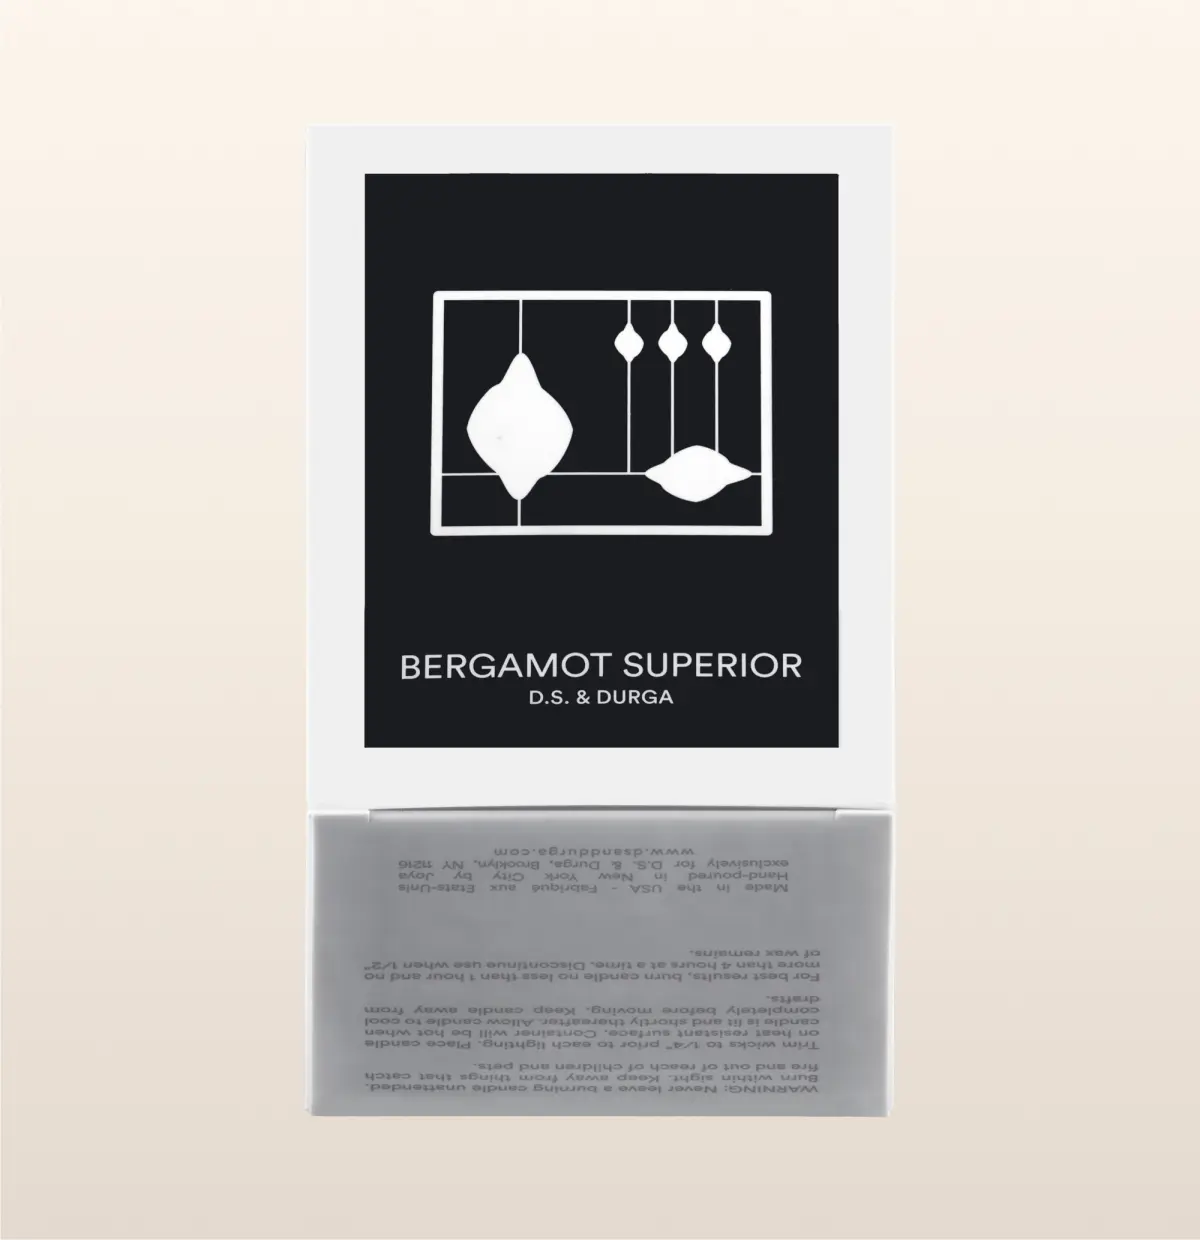 Bergamot Superior by D.S. & Durga